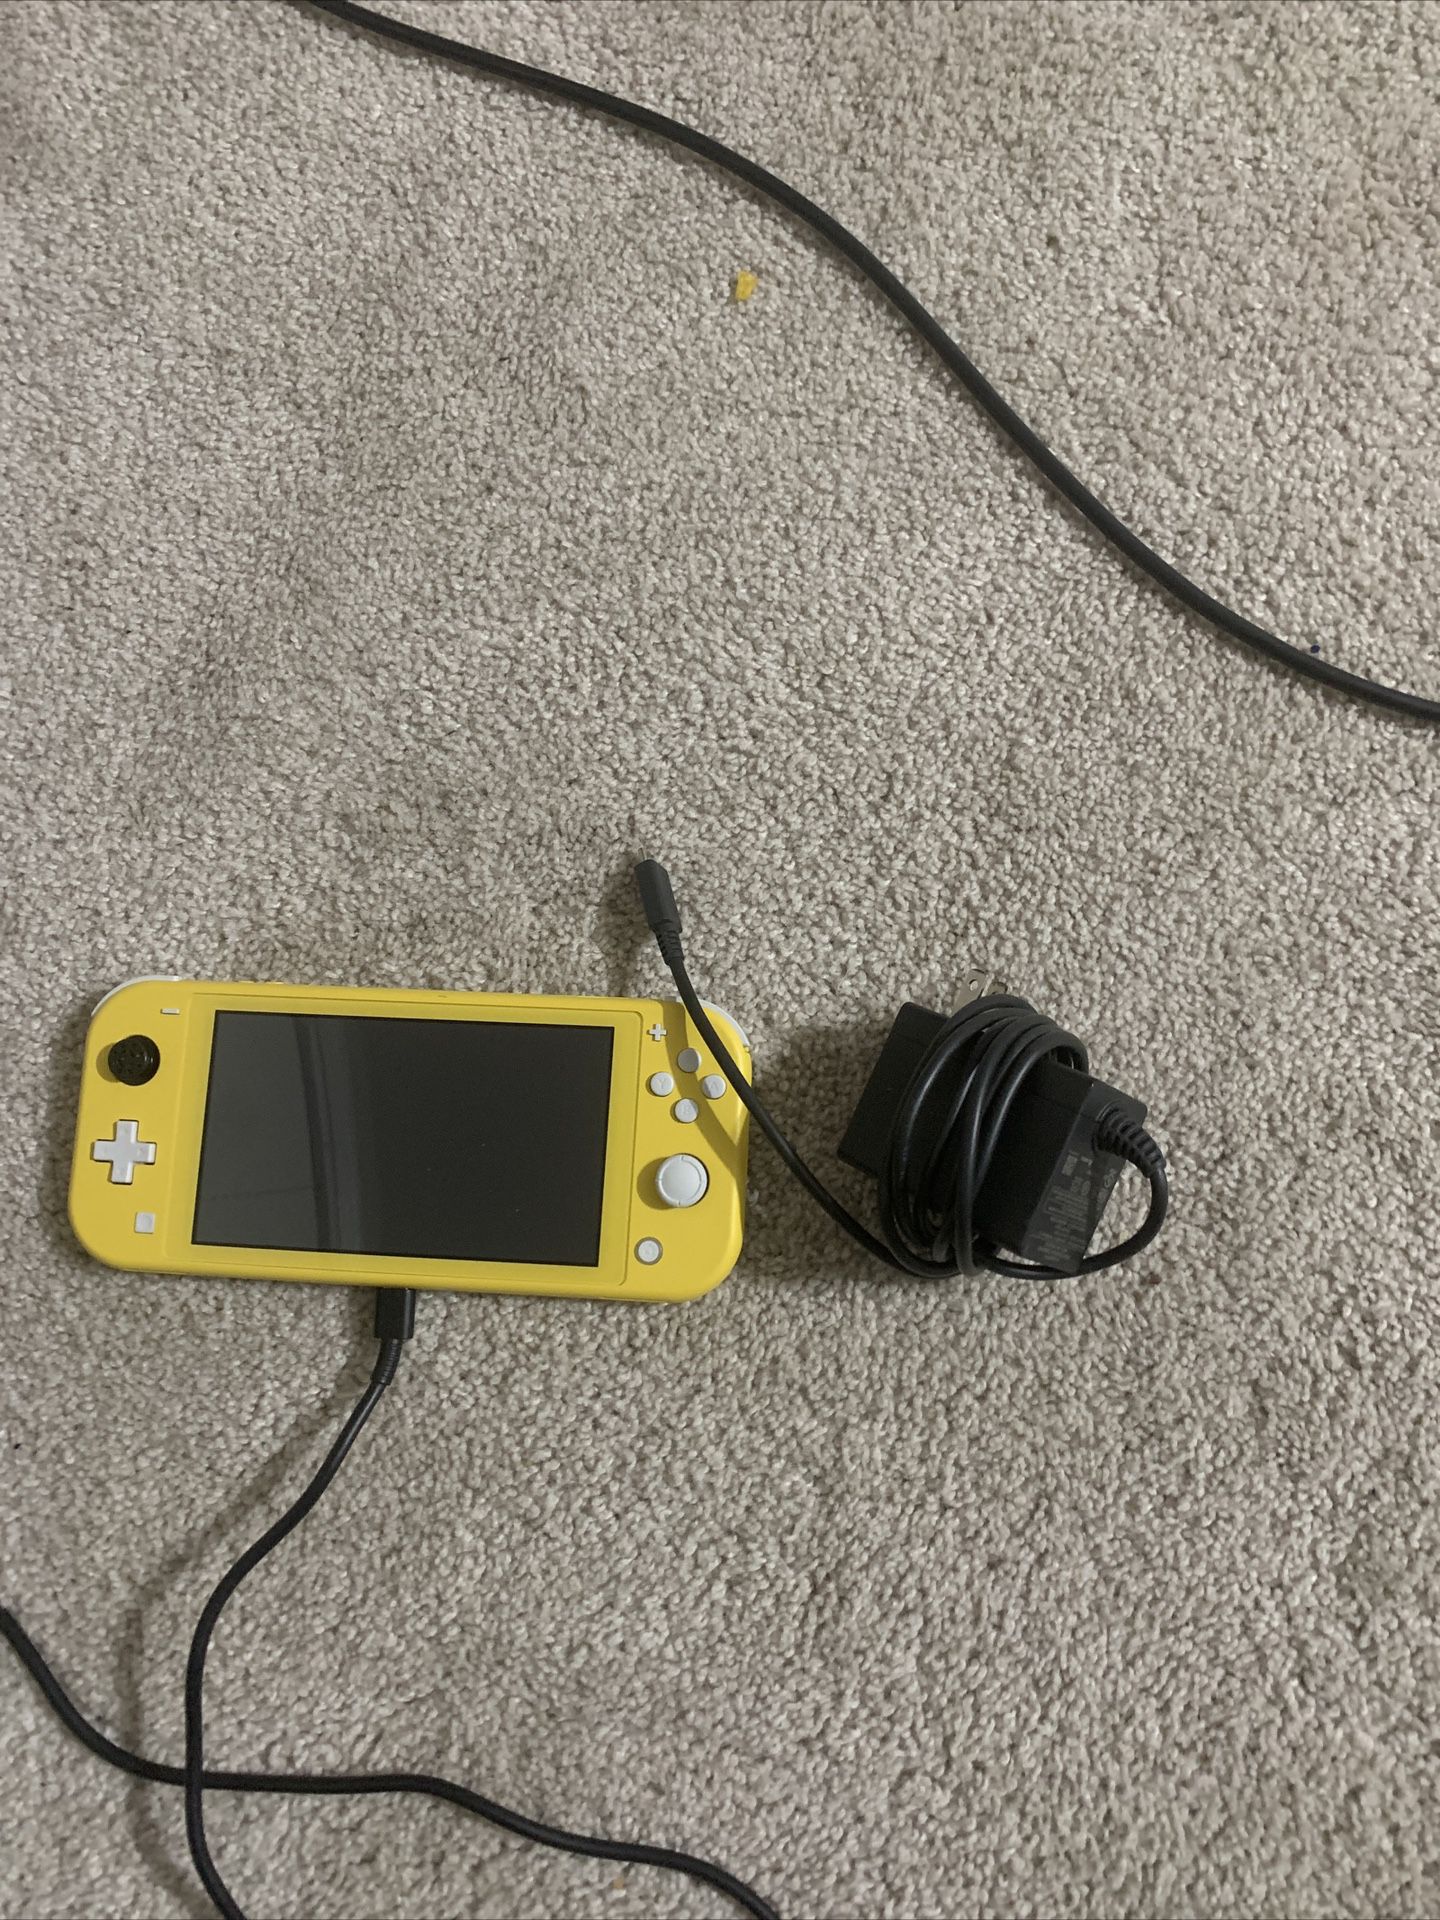 Yellow Nintendo Switch 